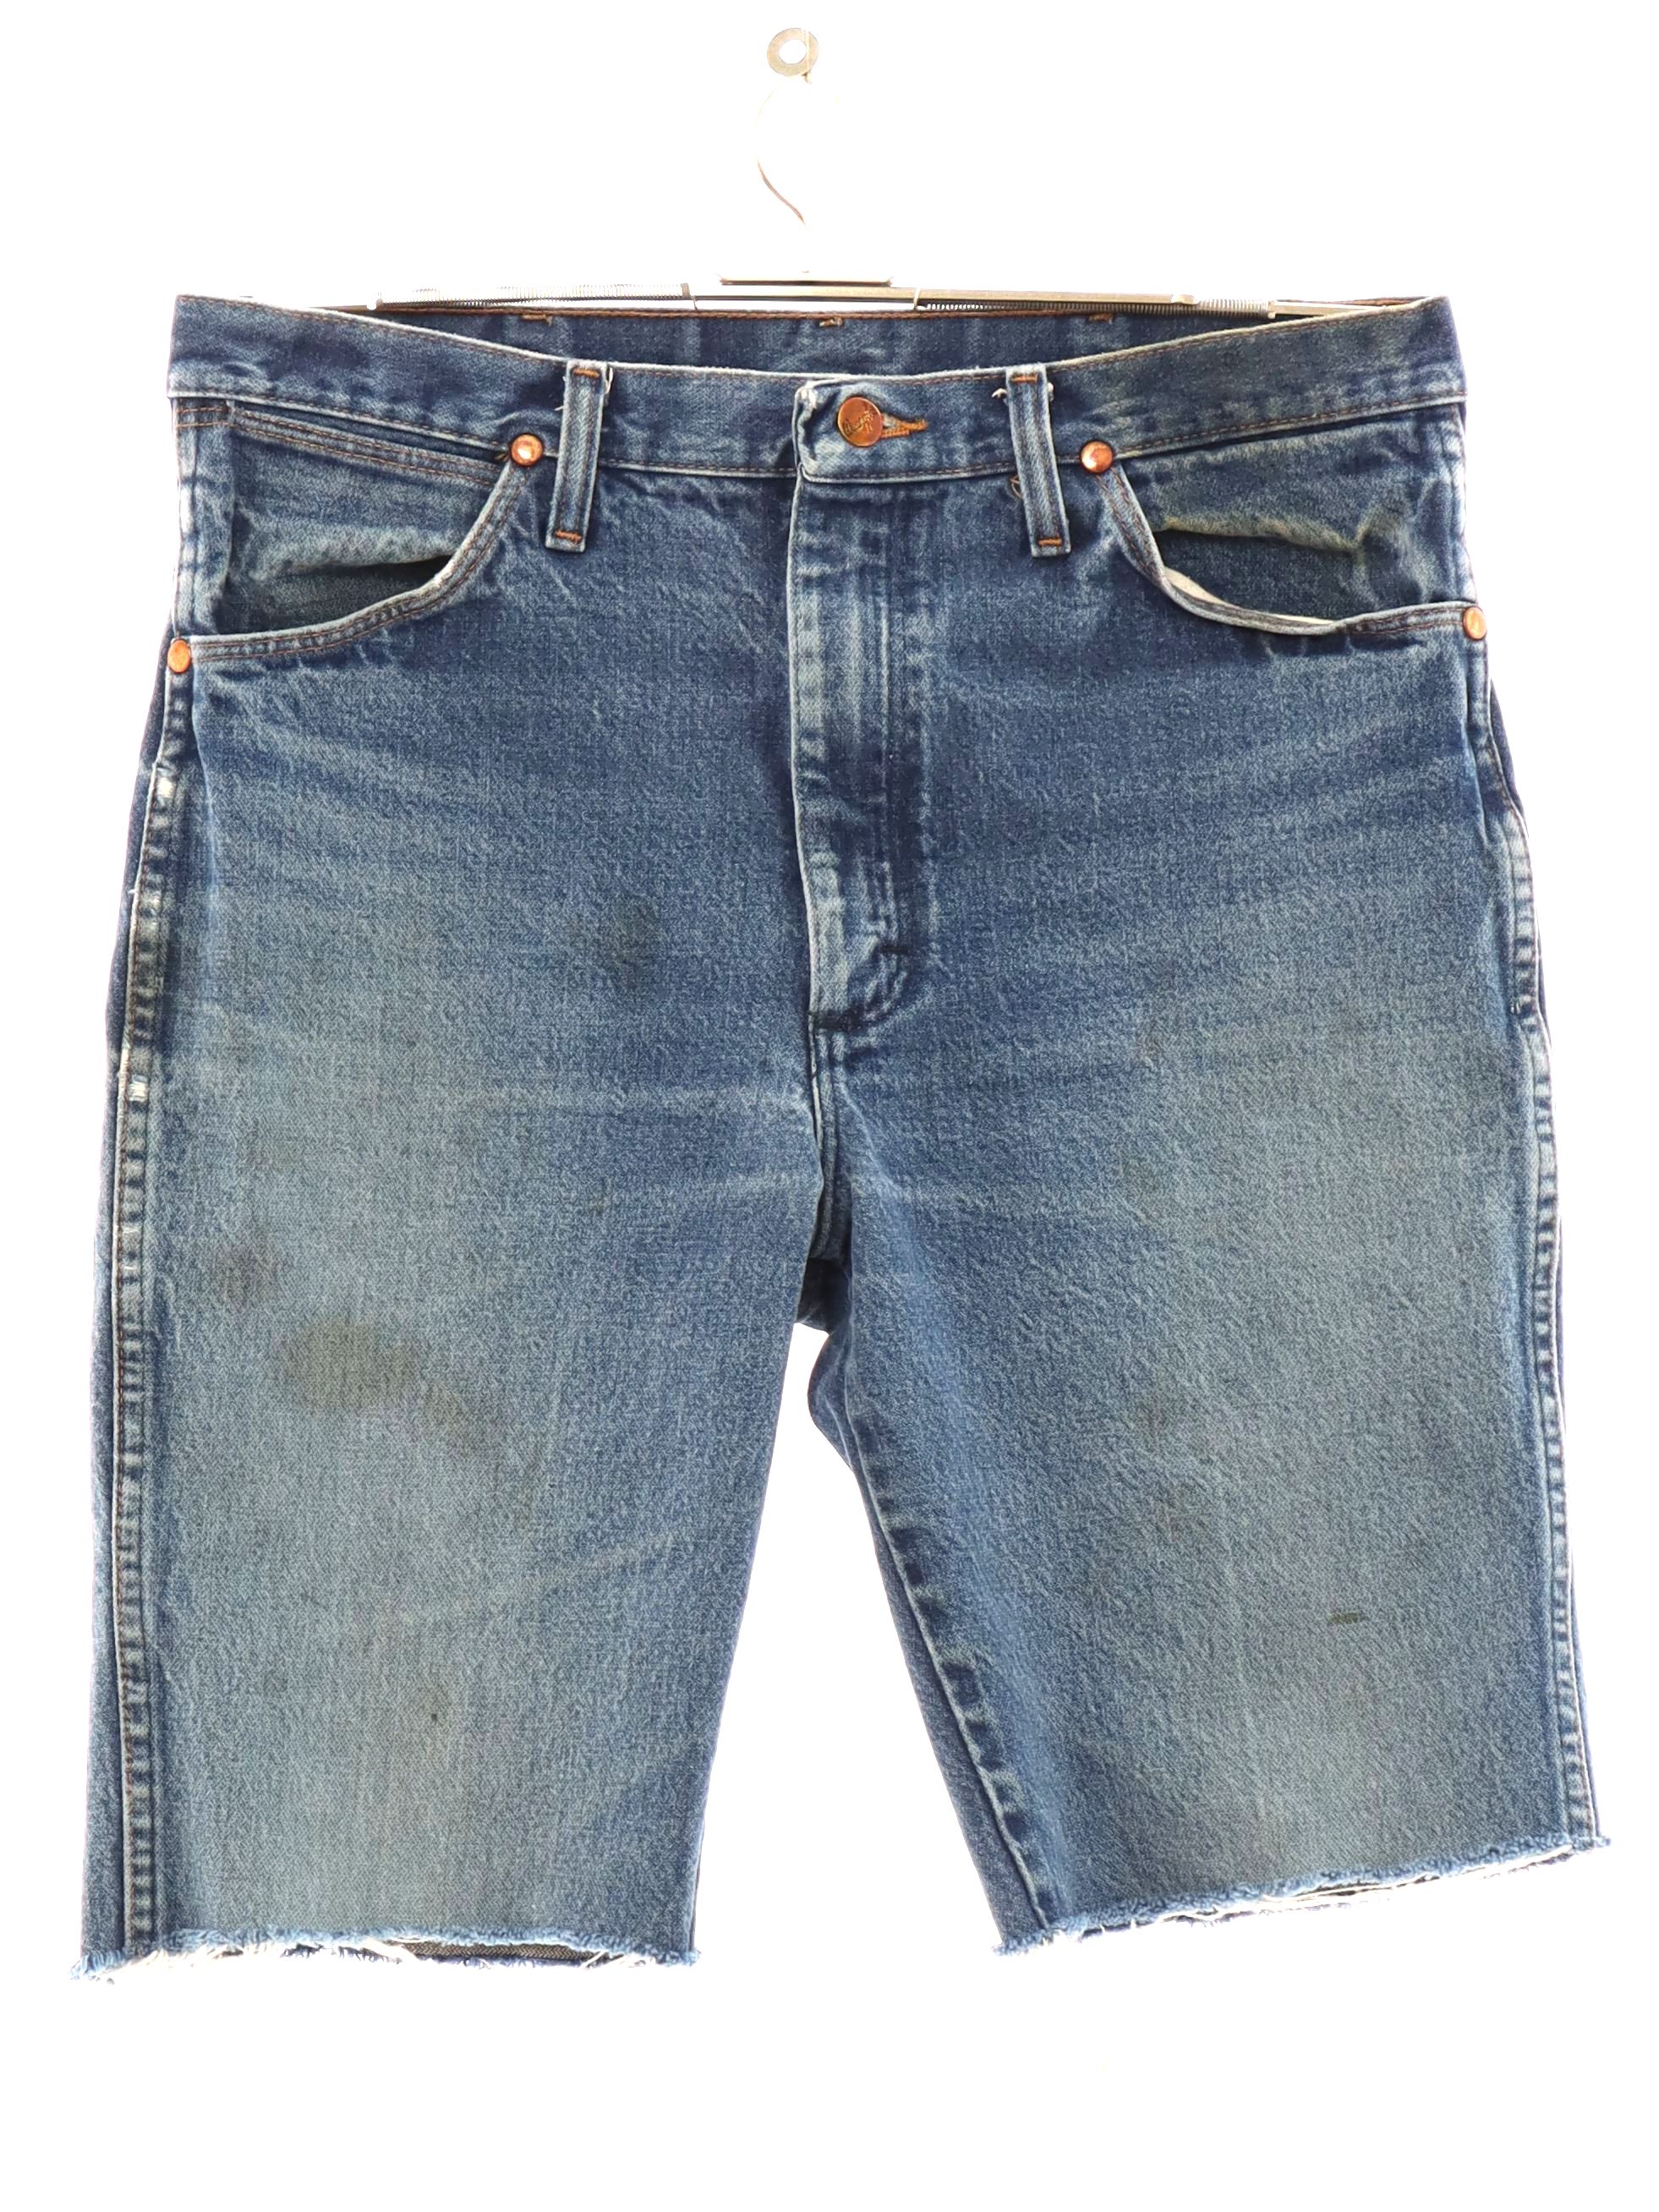 Shorts: 90s -Wrangler- Mens blue cotton denim jeans cut off shorts with ...